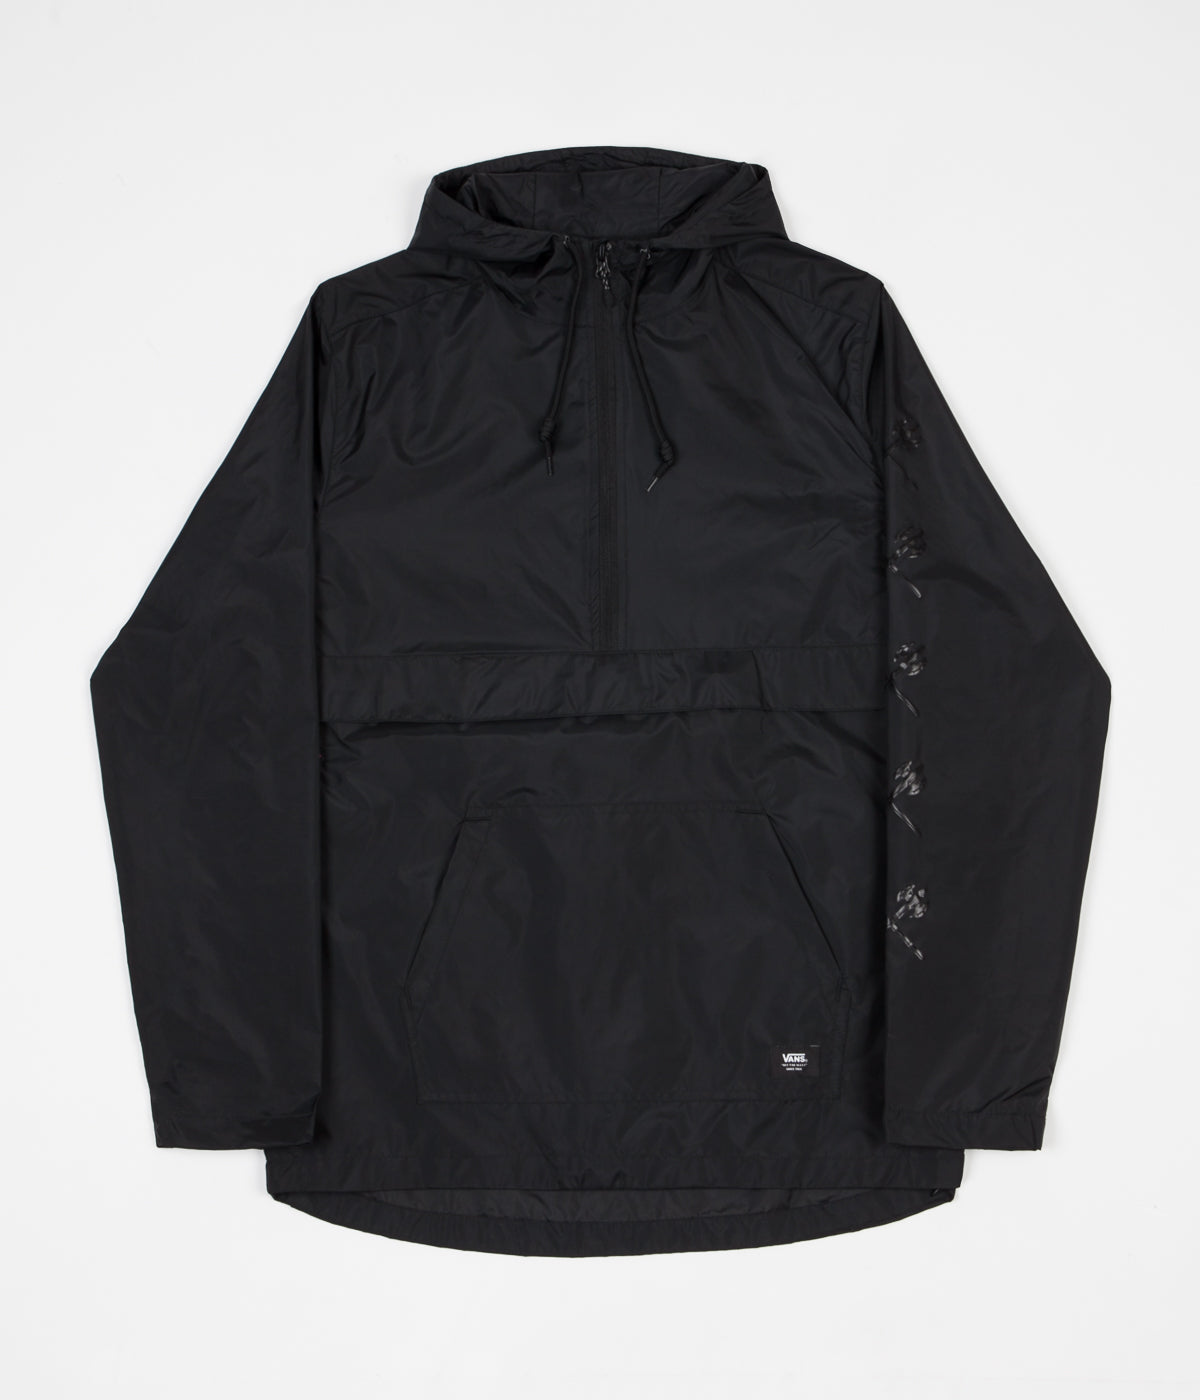 stoneridge anorak jacket